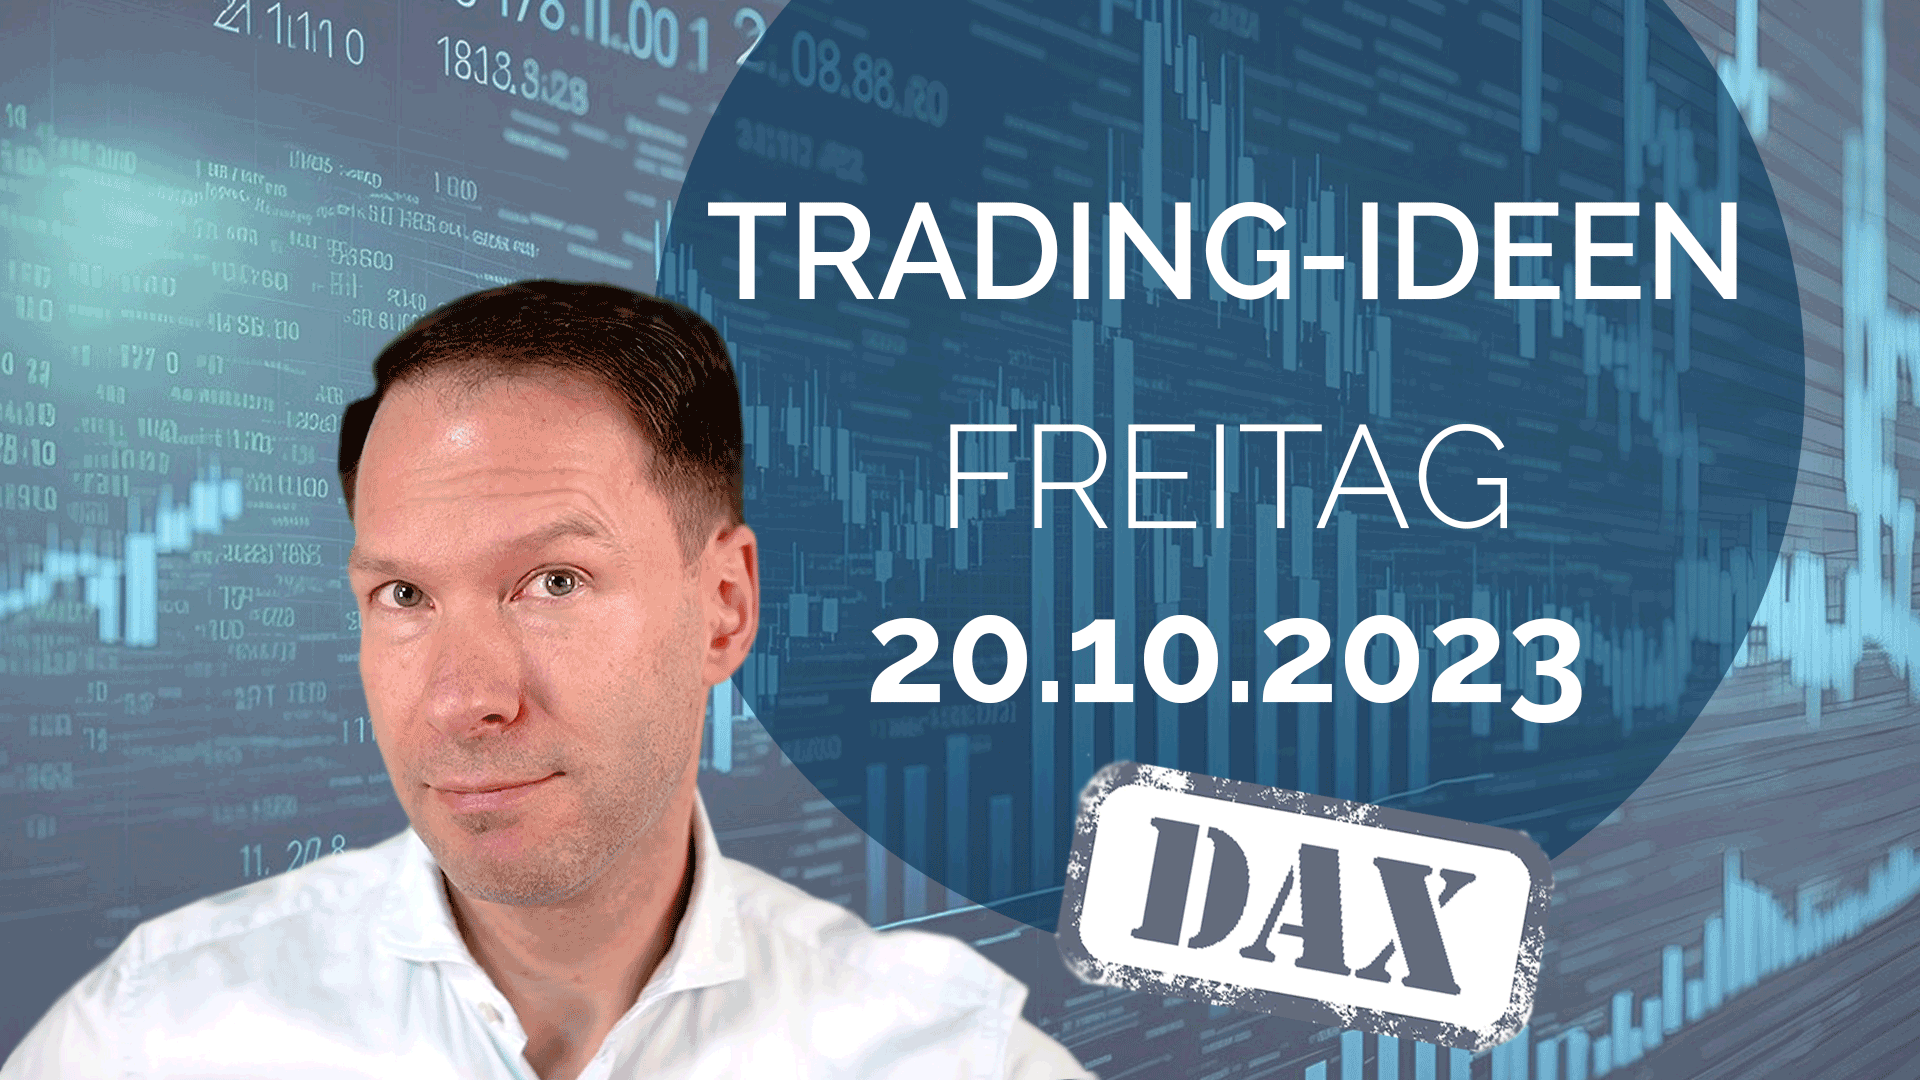 Trading Ideen DAX Andreas Bernstein 201023